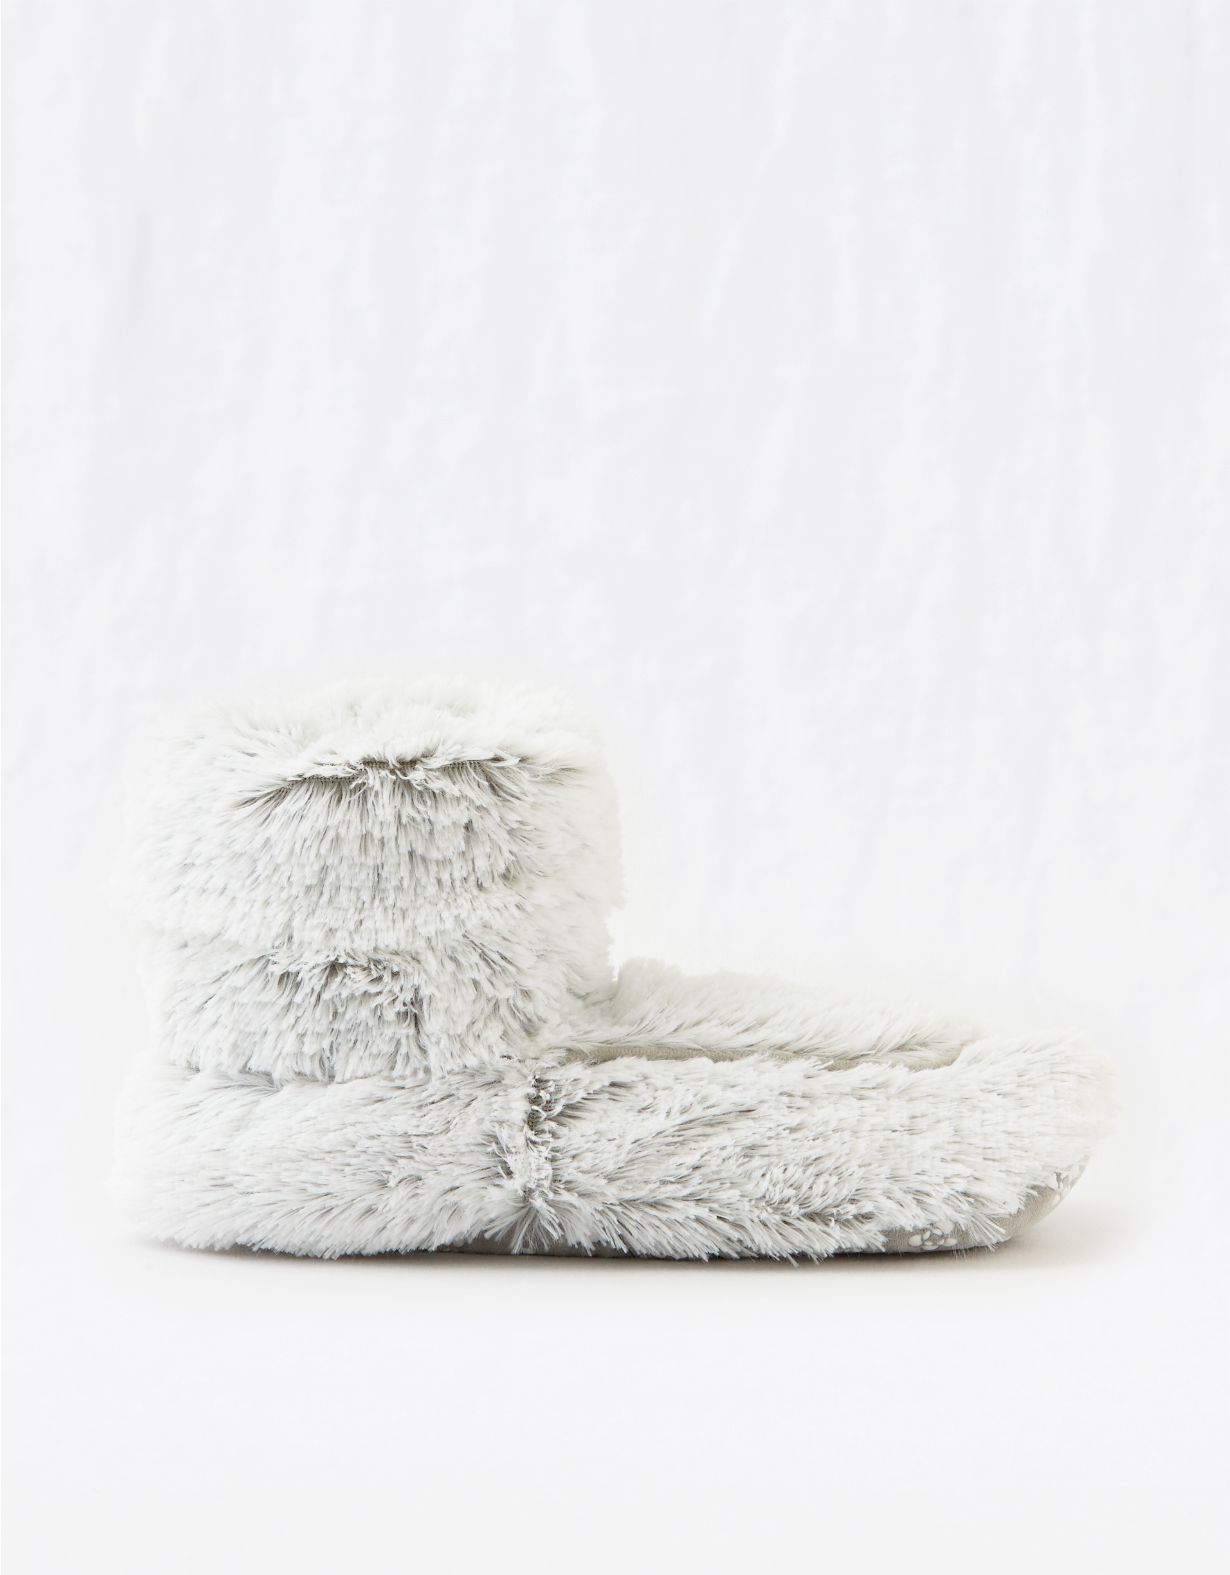 Warmies Marshmallow Boots - Grey